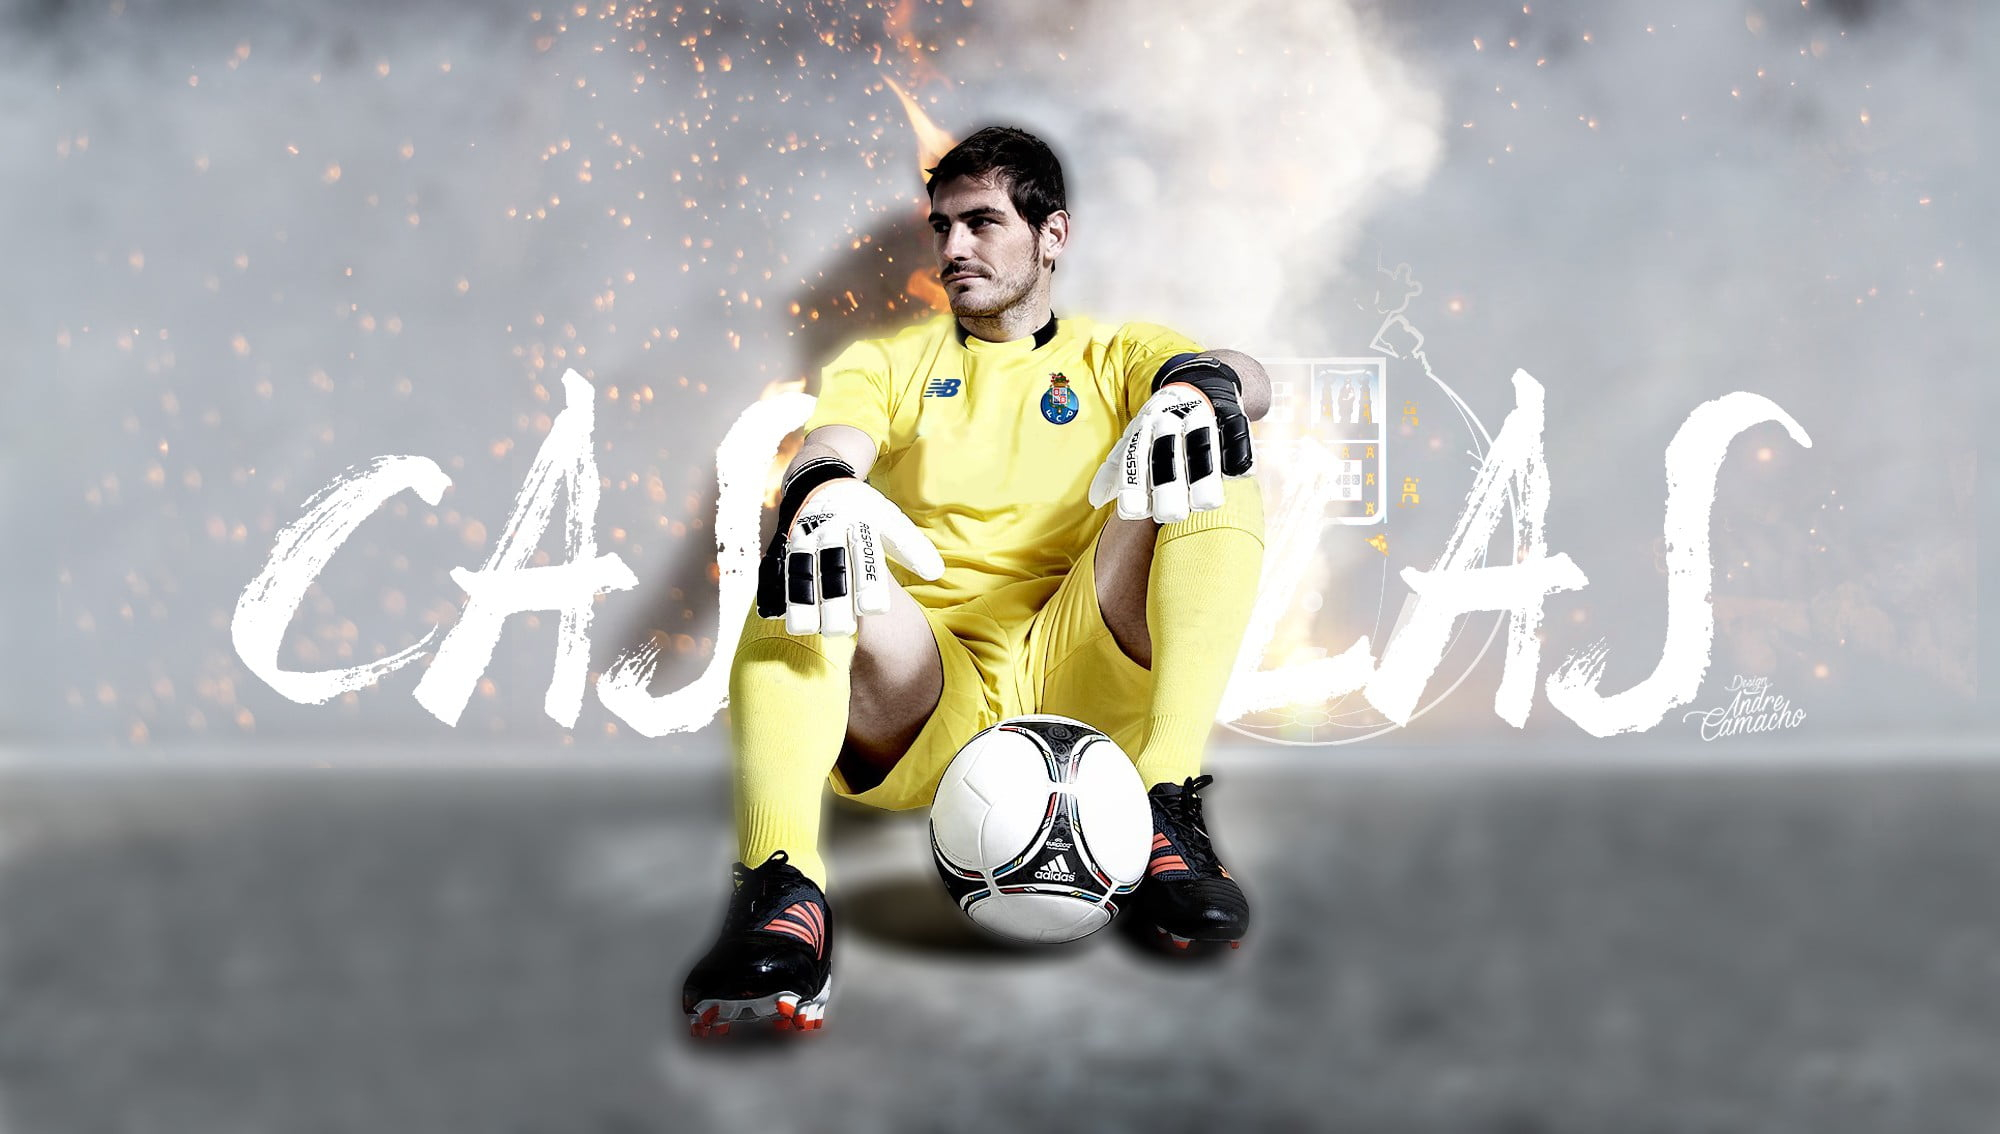 Casillas wallpaper, fc porto, men's yellow soccer jersey and soccer ball